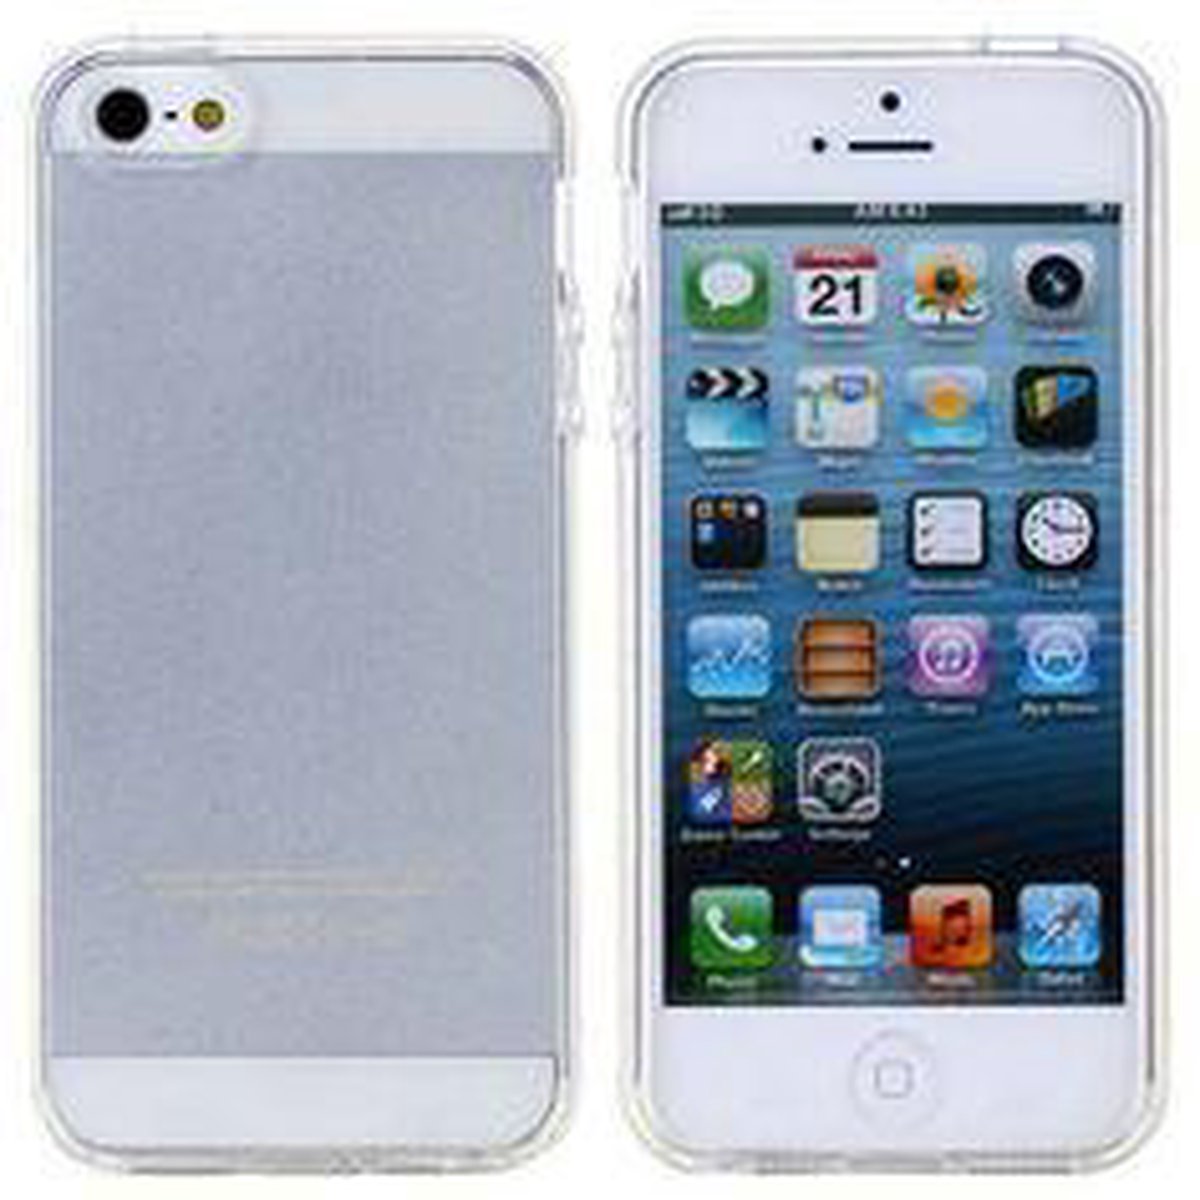 Hoesje voor iPhone 5 & 5S - Siliconen - Transparant